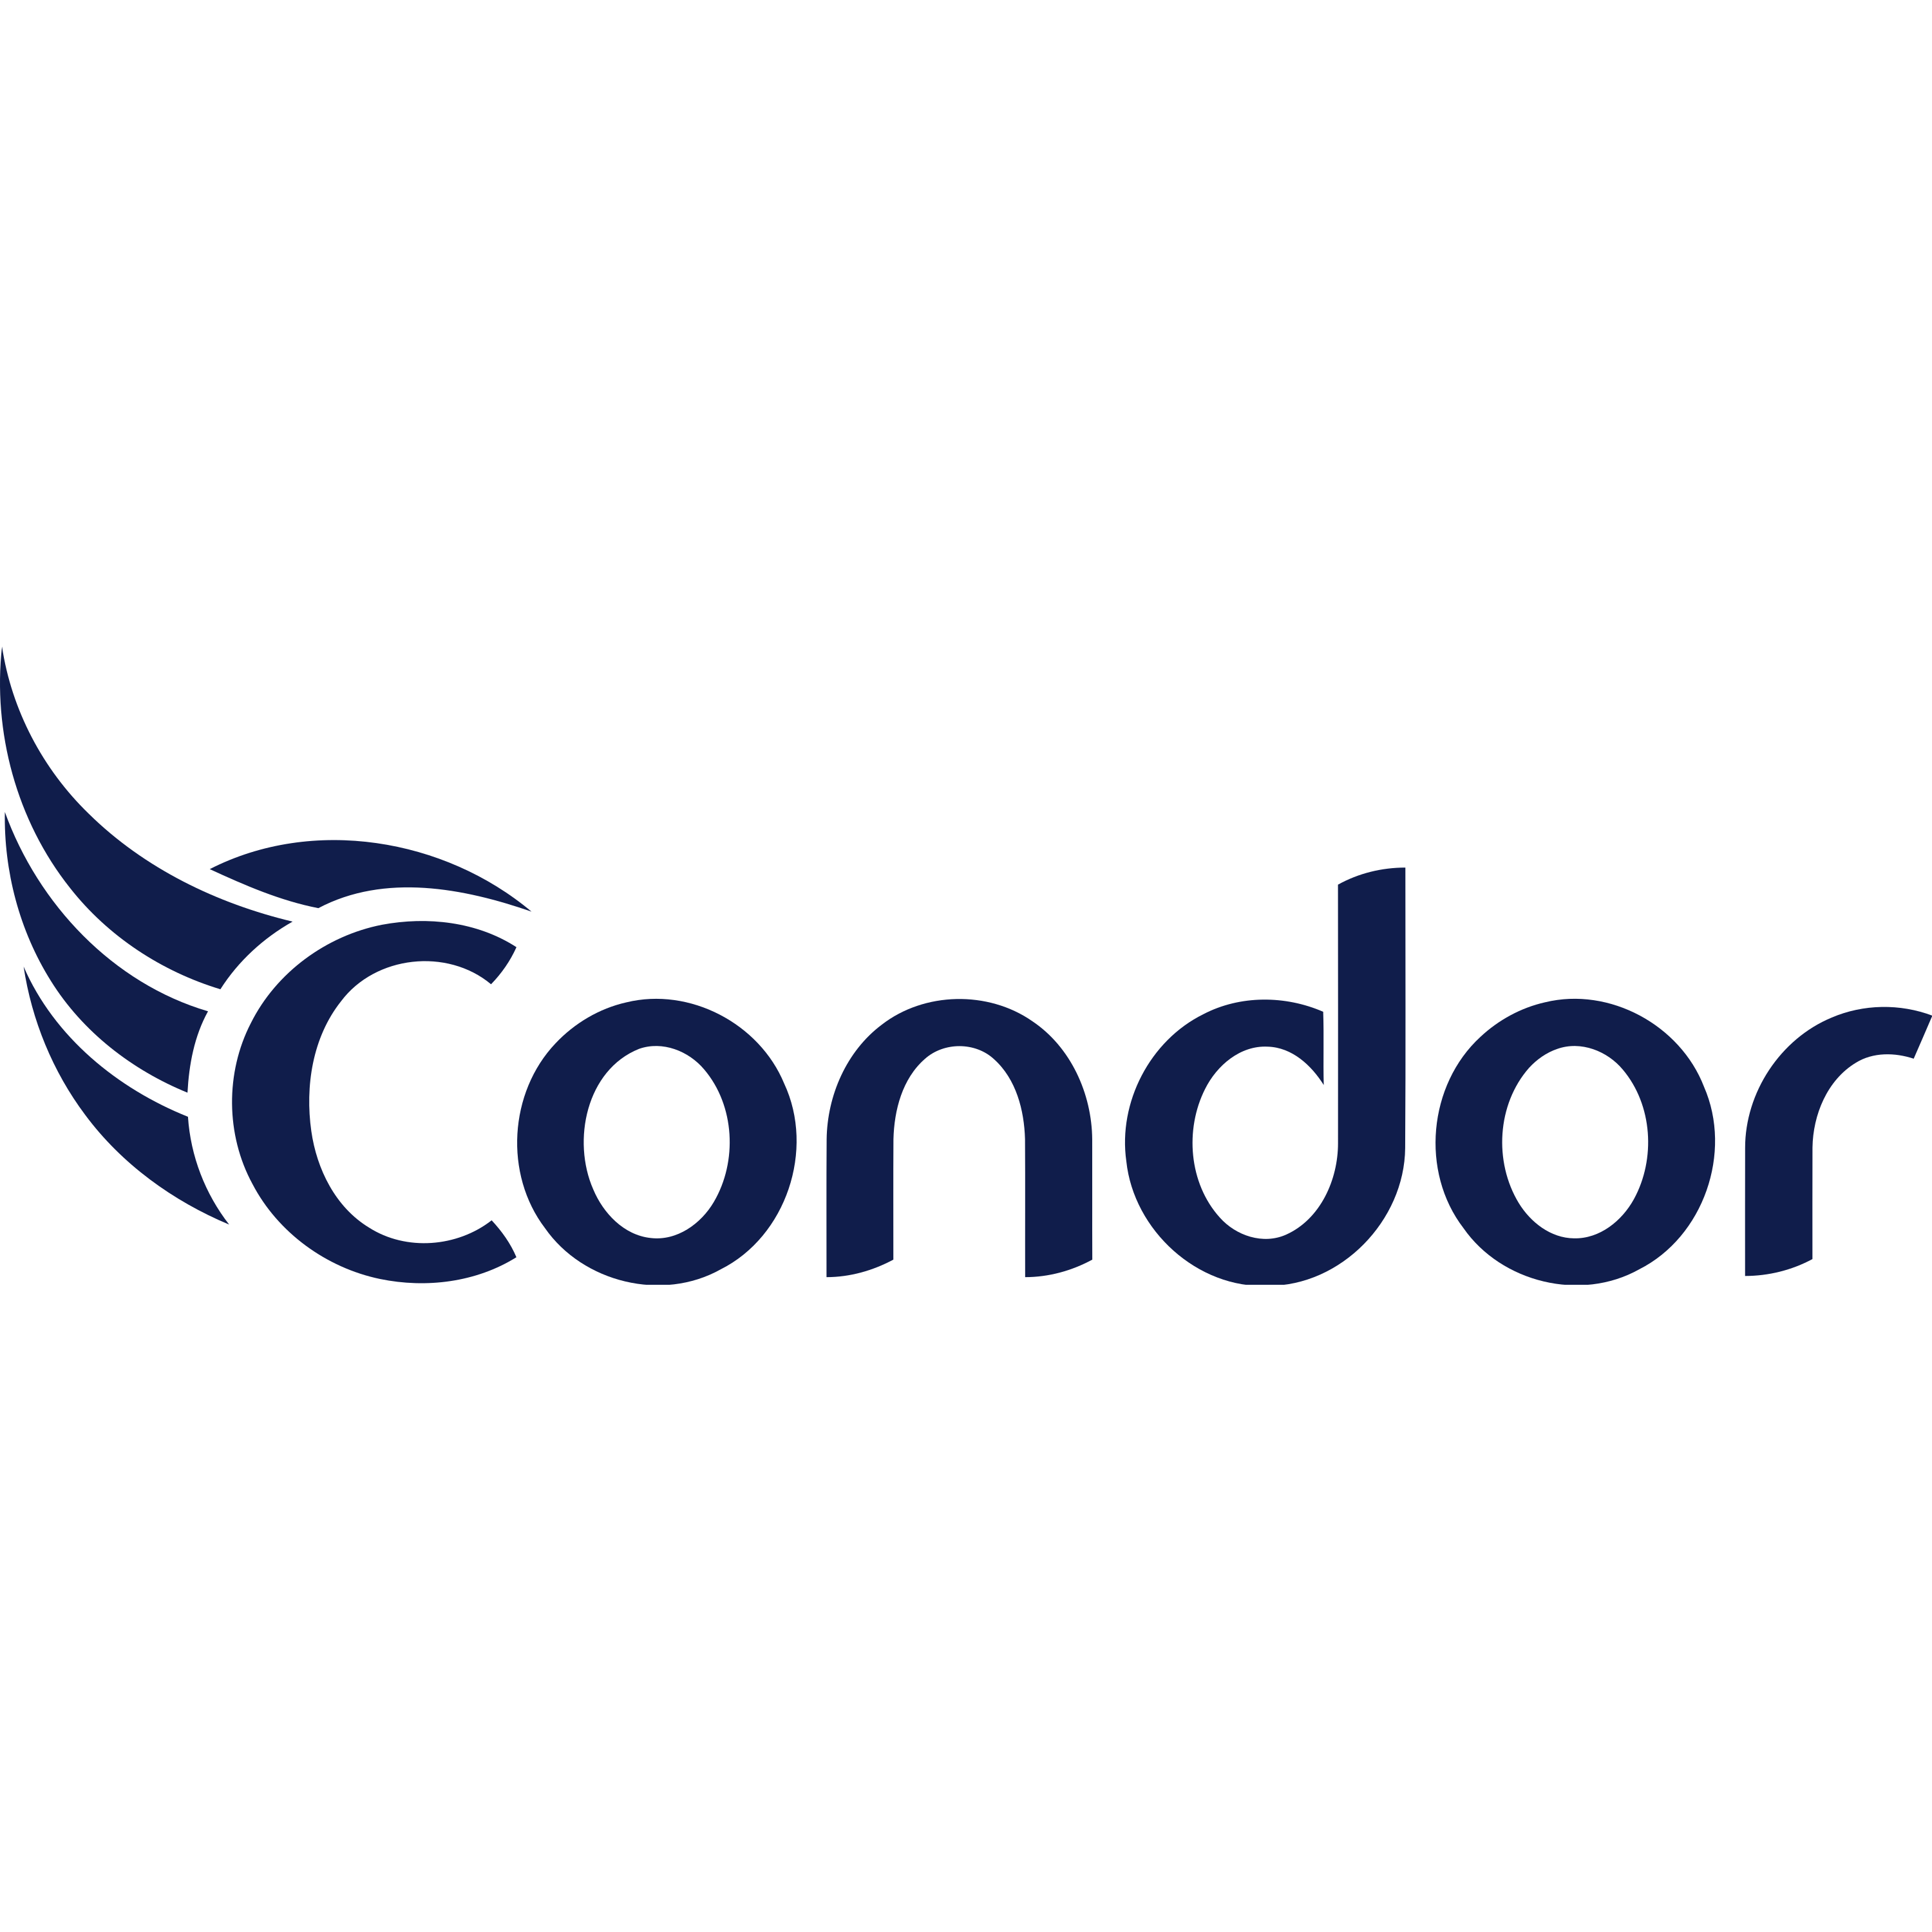 Condor Electronics Logo  Transparent Image